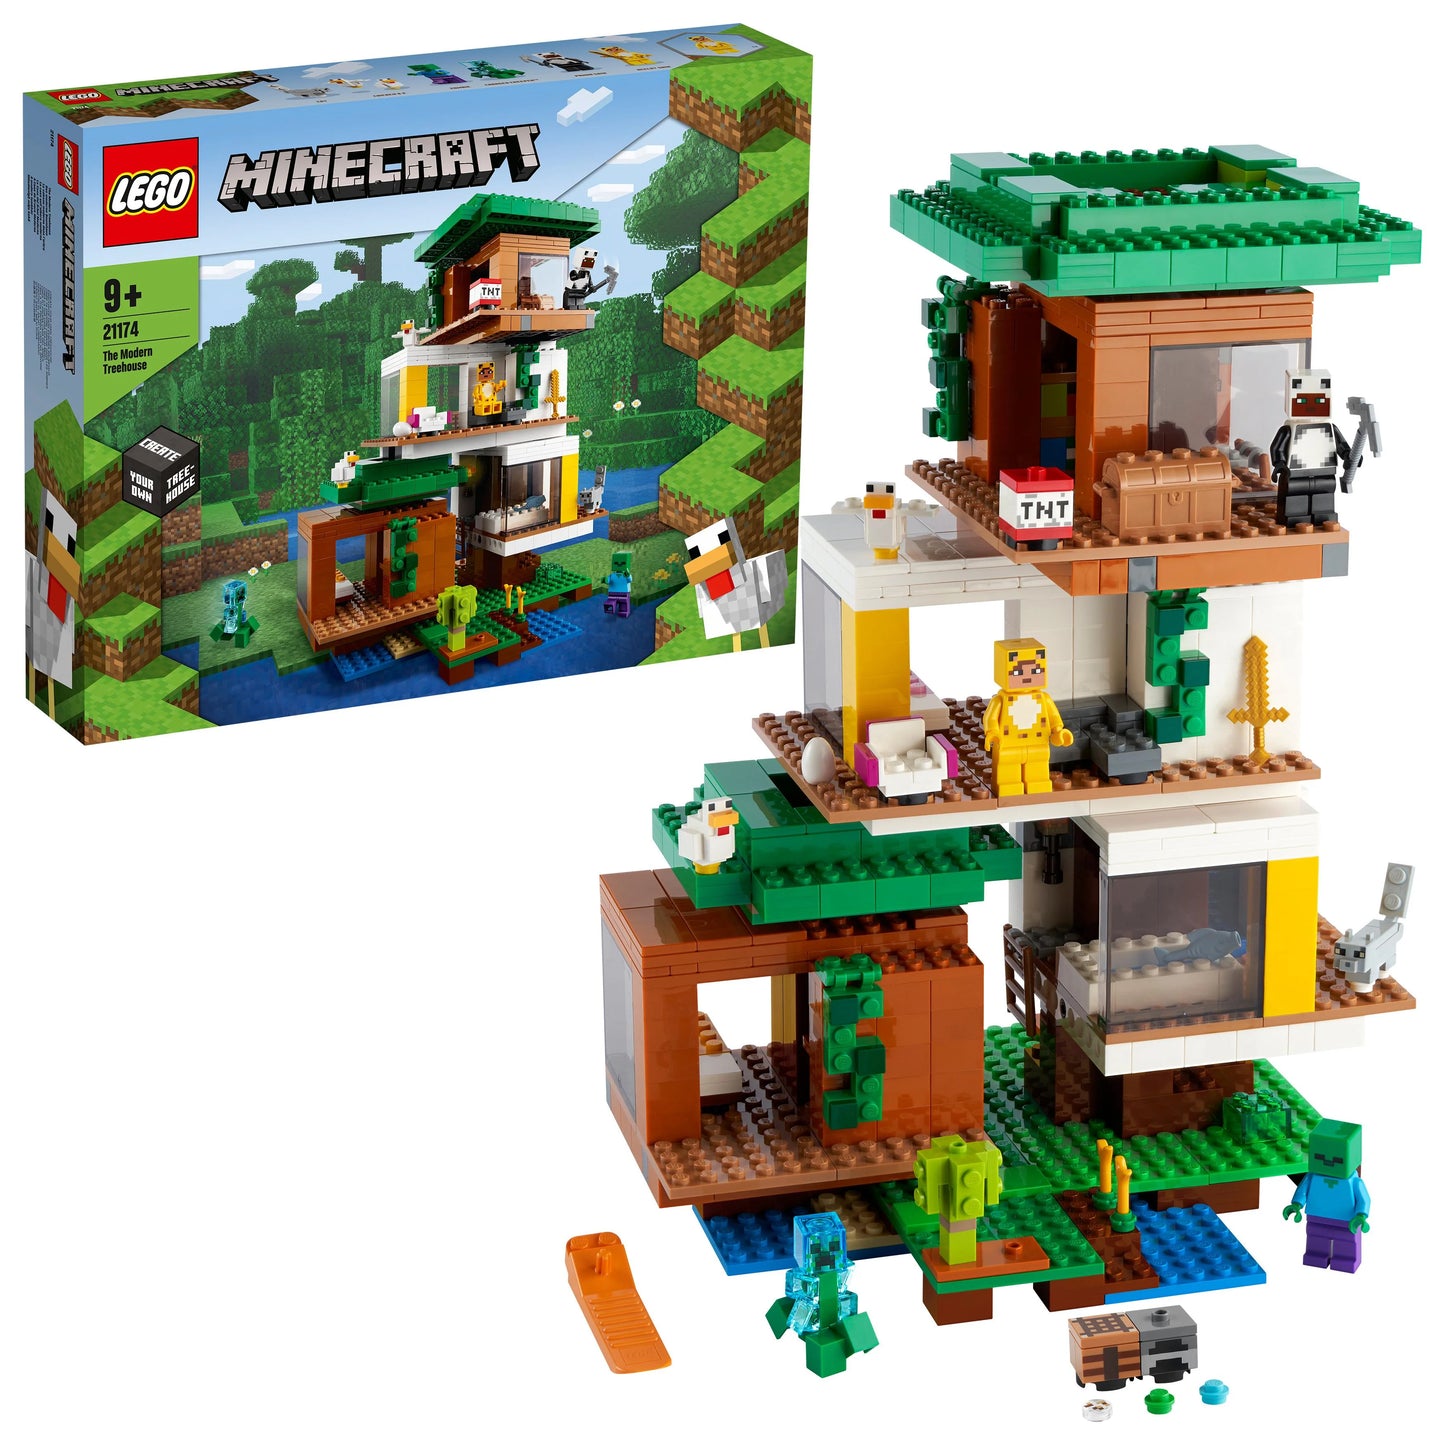 The modern treehouse LEGO Minecraft